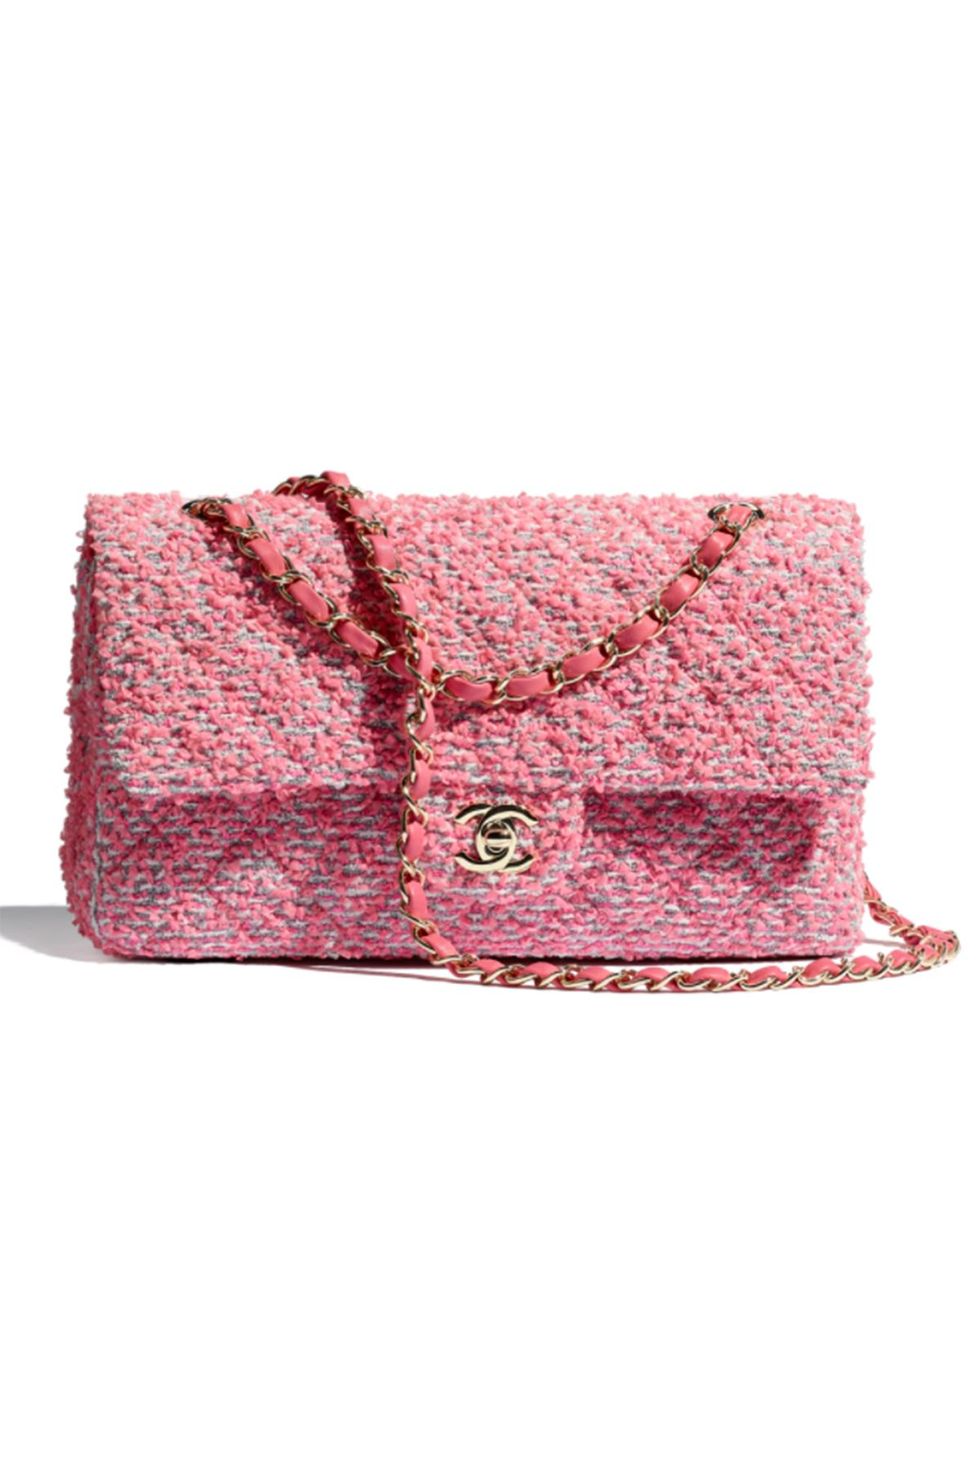 Chanel Metallic Small Flap Bag with Top Handle